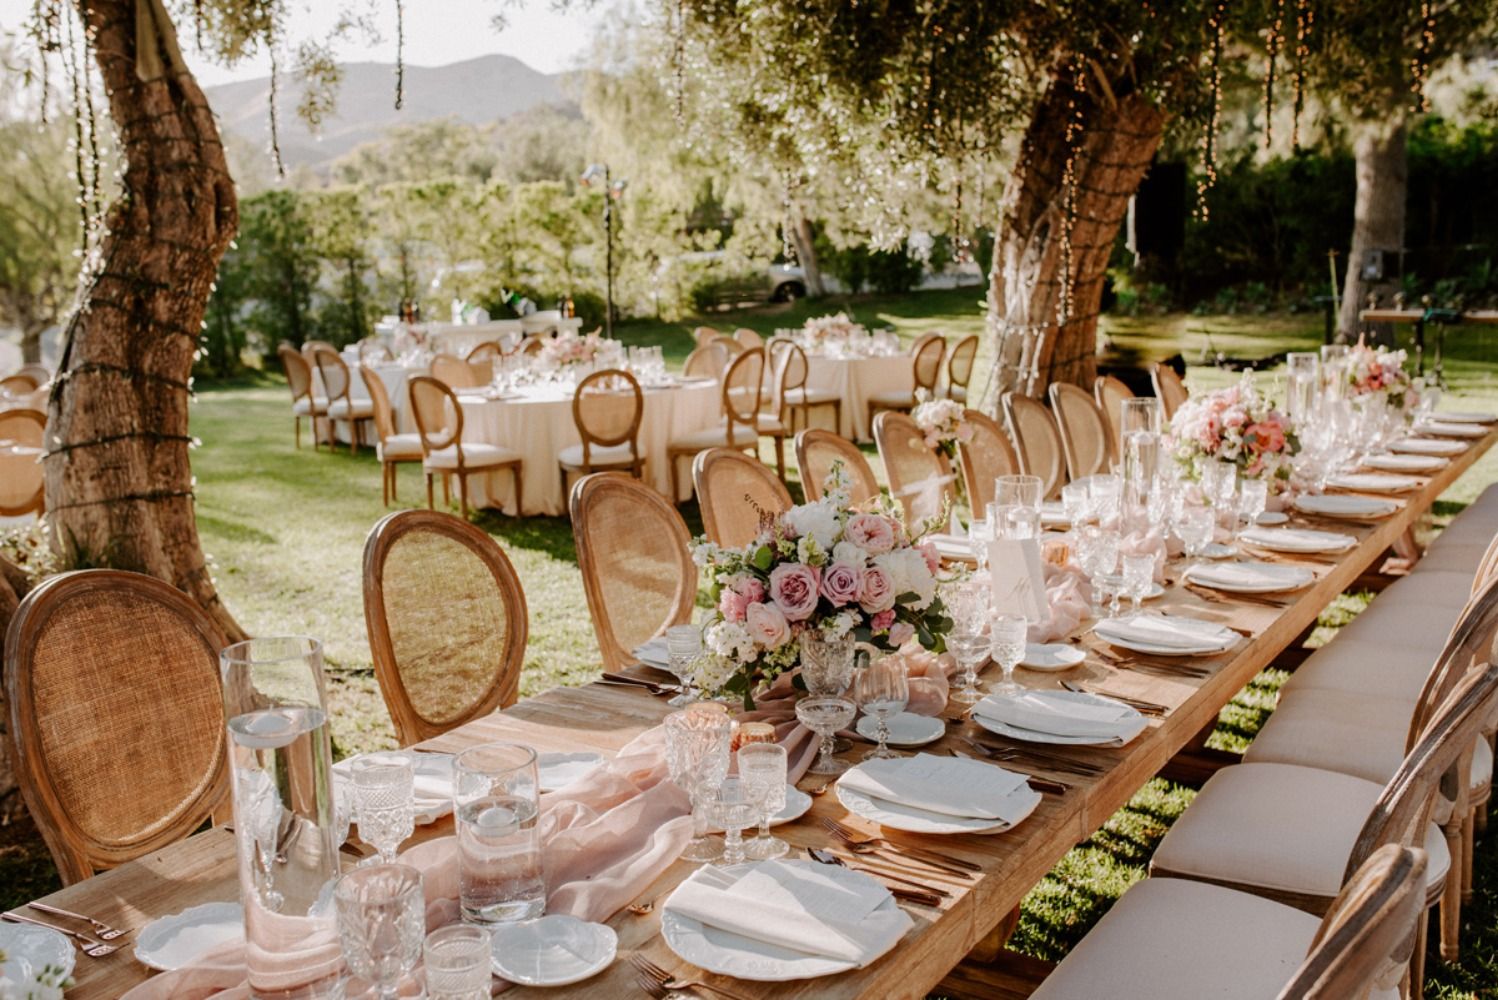 How To Have A Glamorous Midsummer Garden Wedding